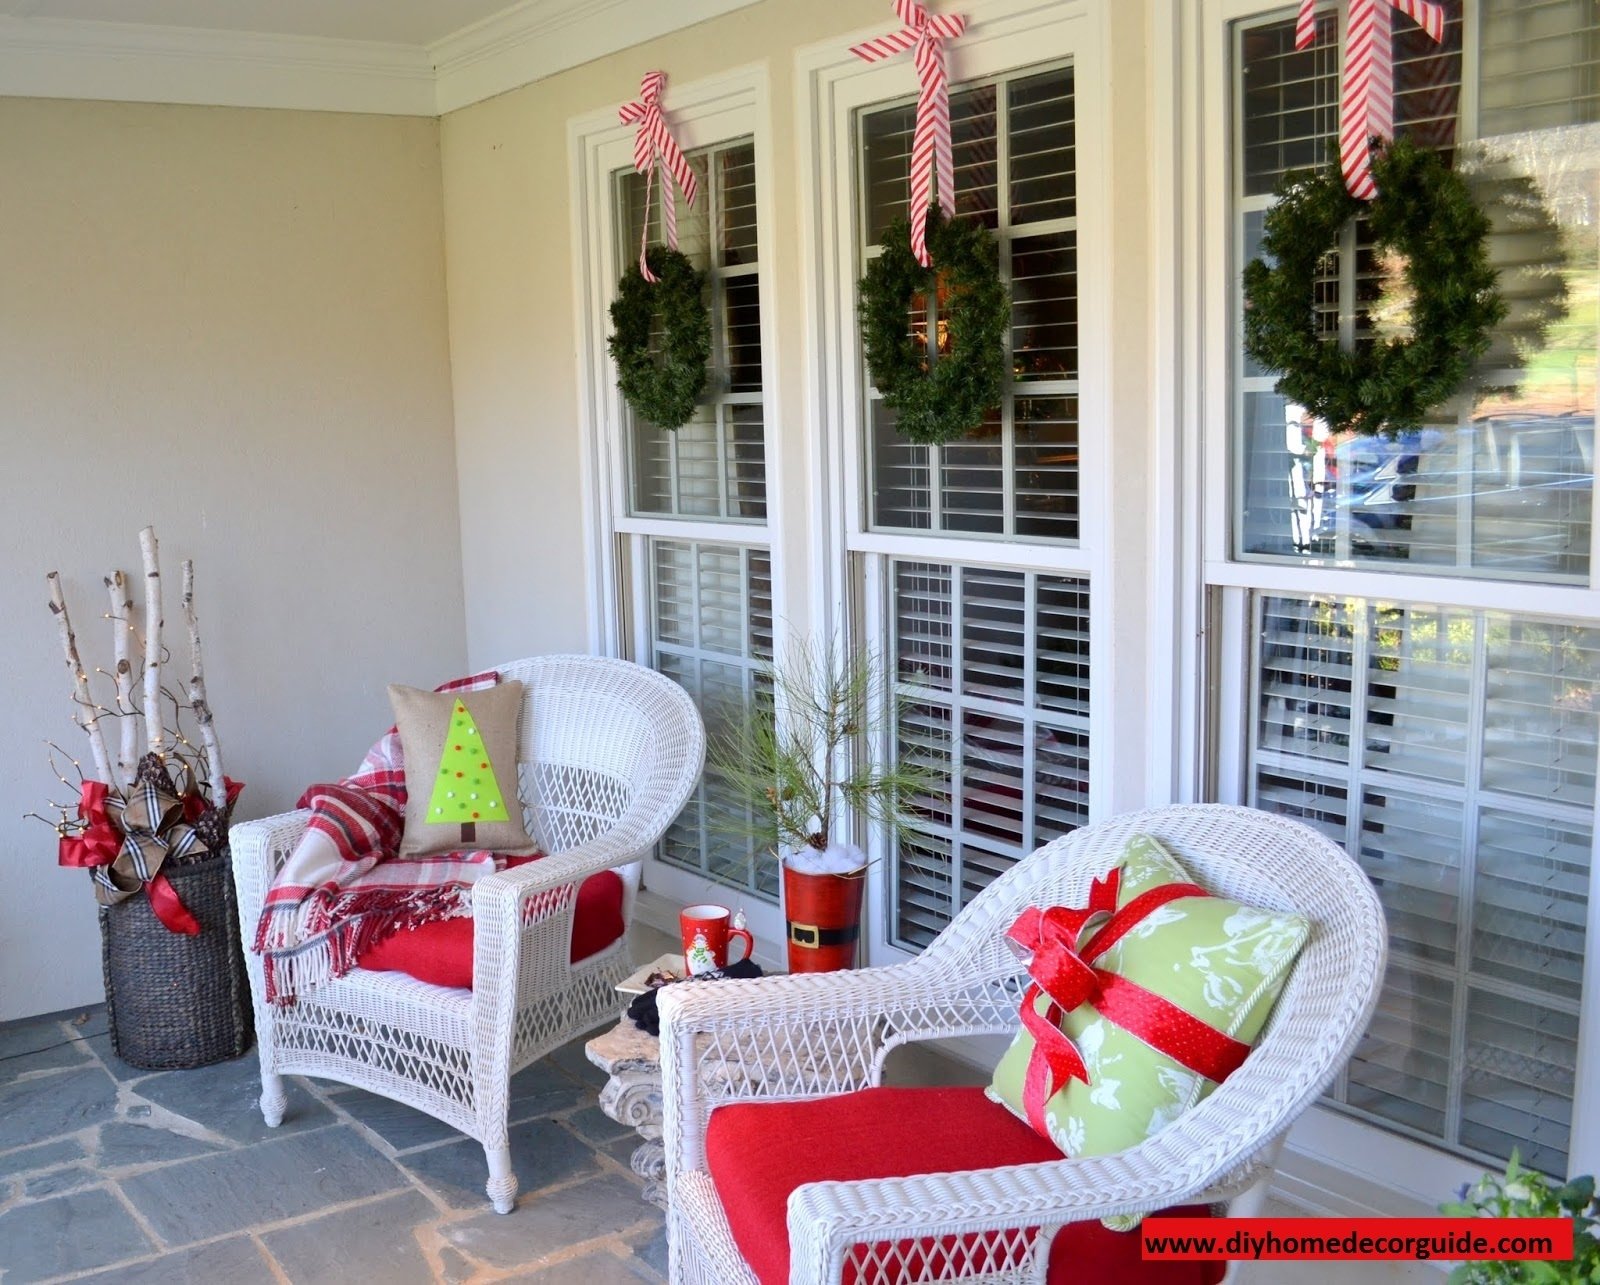 10 Elegant Simple Outdoor Christmas Decoration Ideas 20 diy outdoor christmas decorations ideas 2014 using round 2022